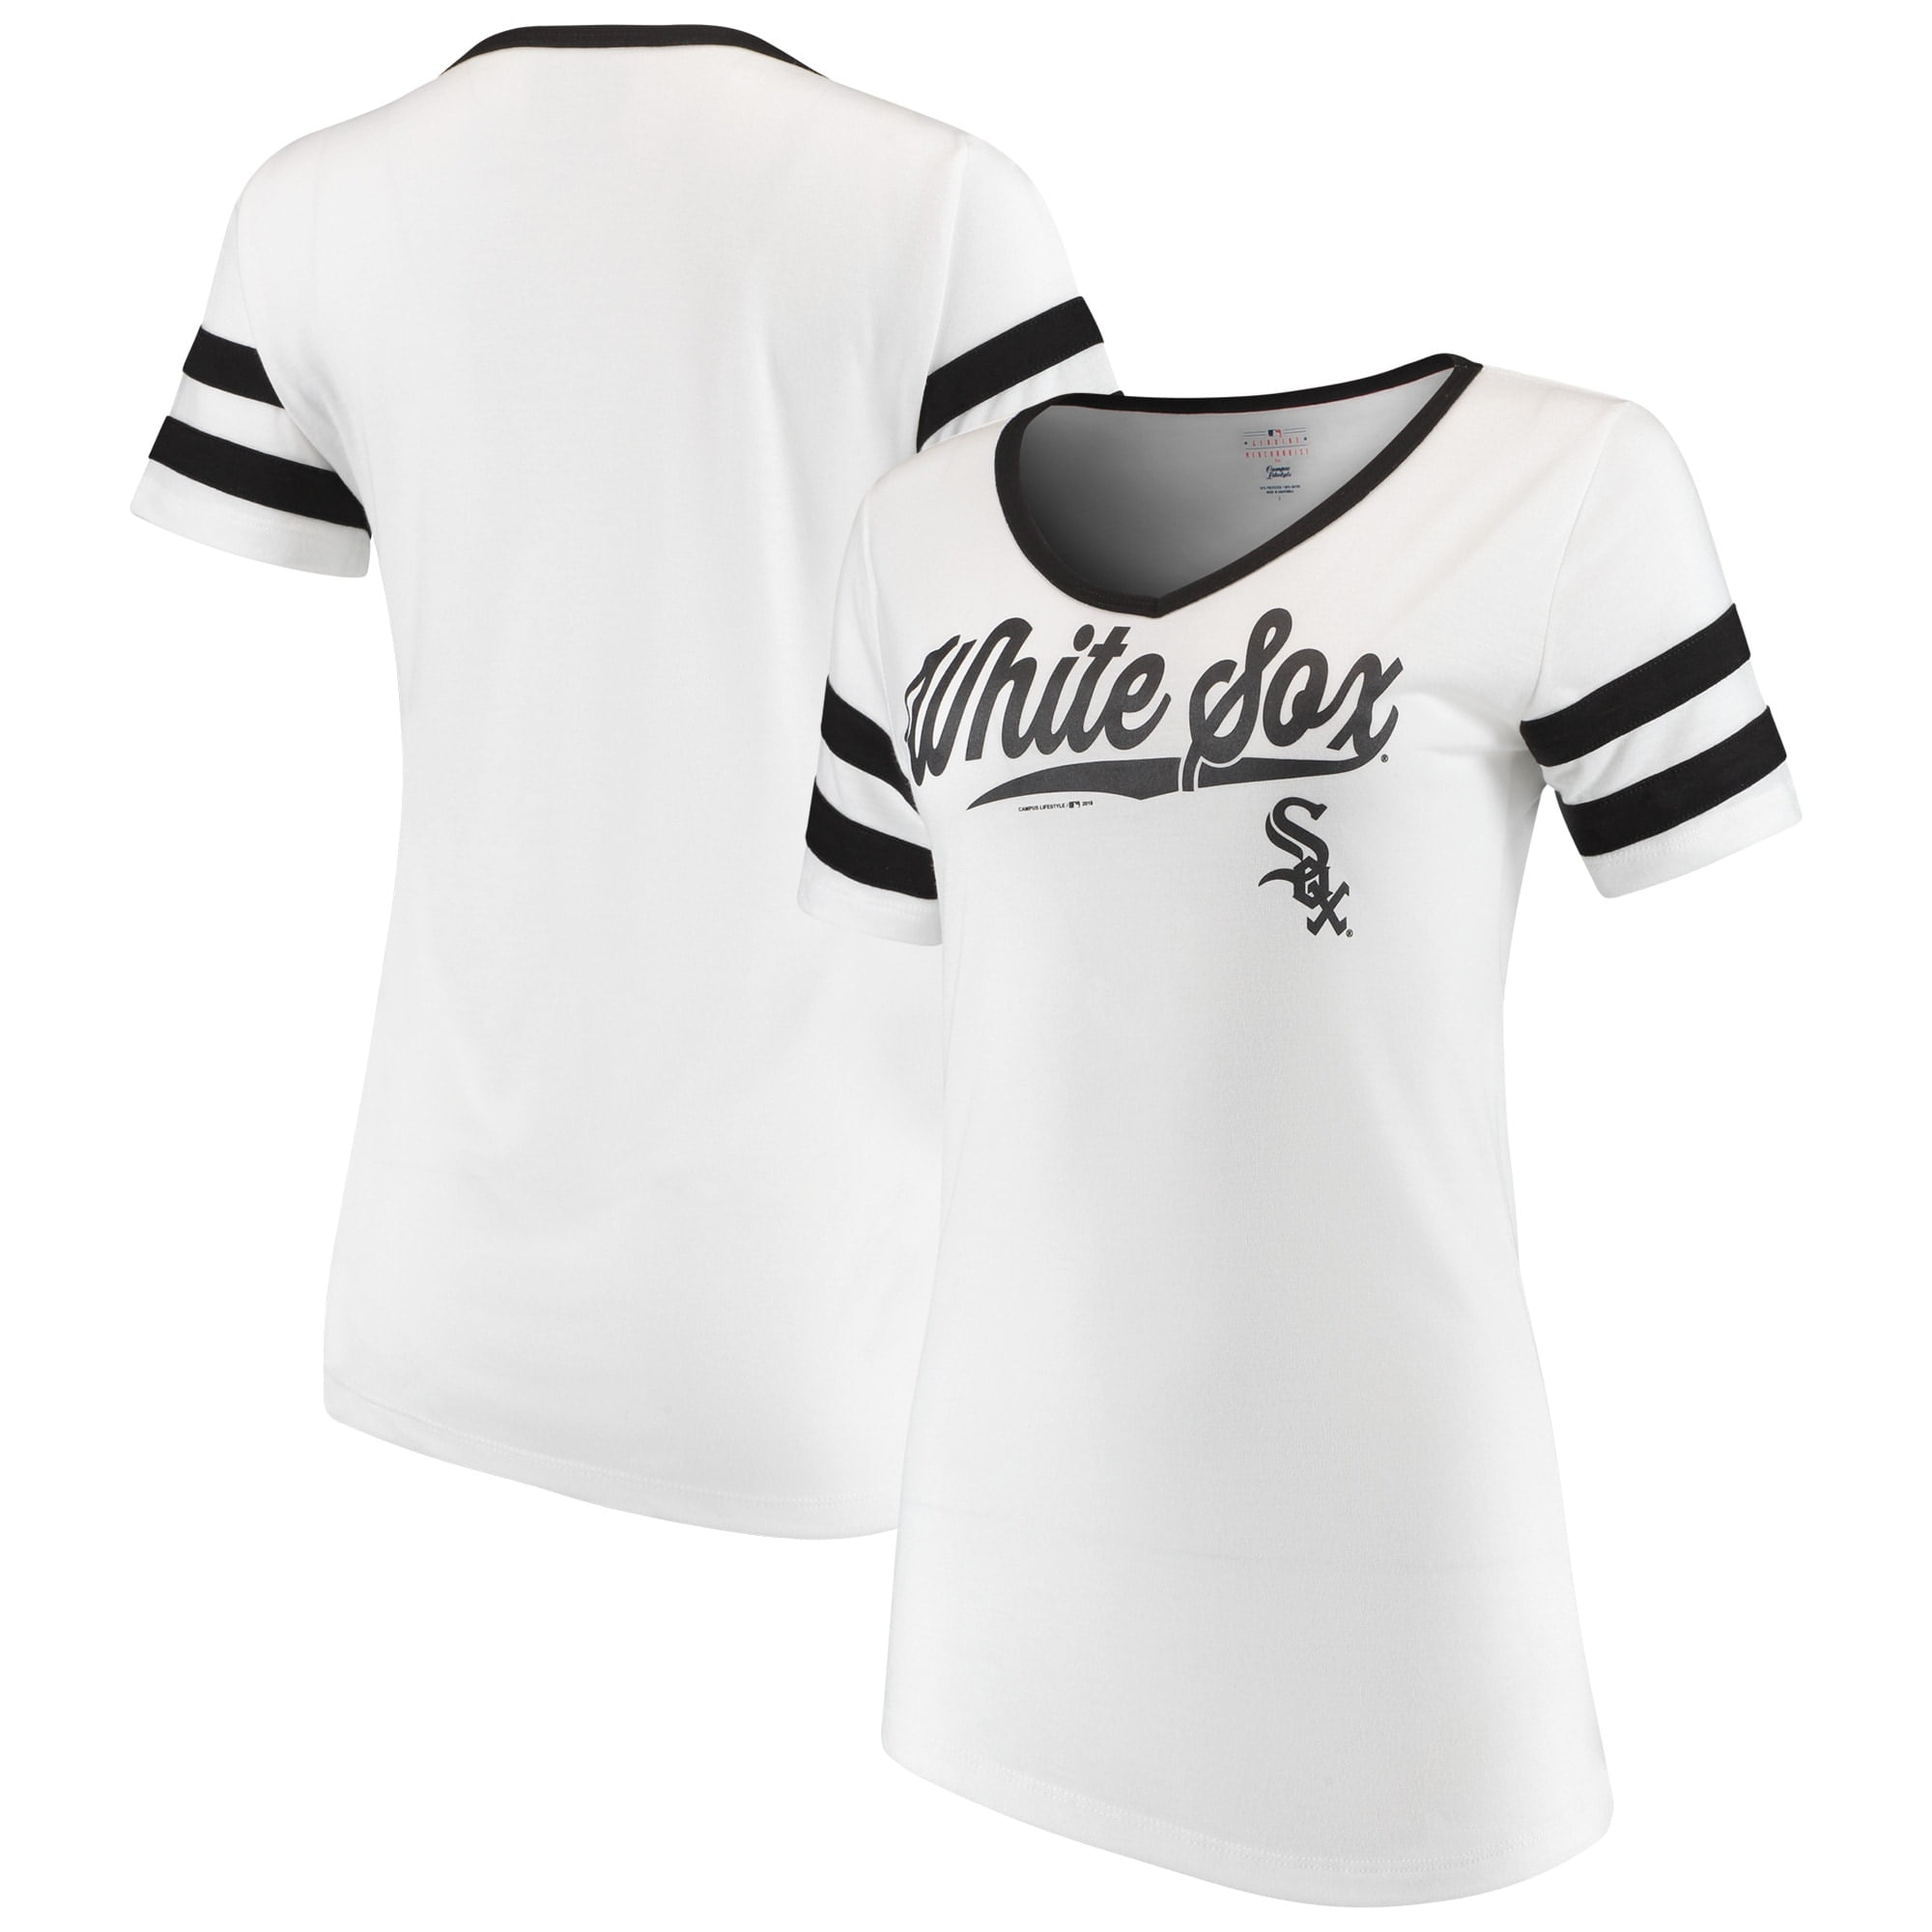 white sox women's jersey